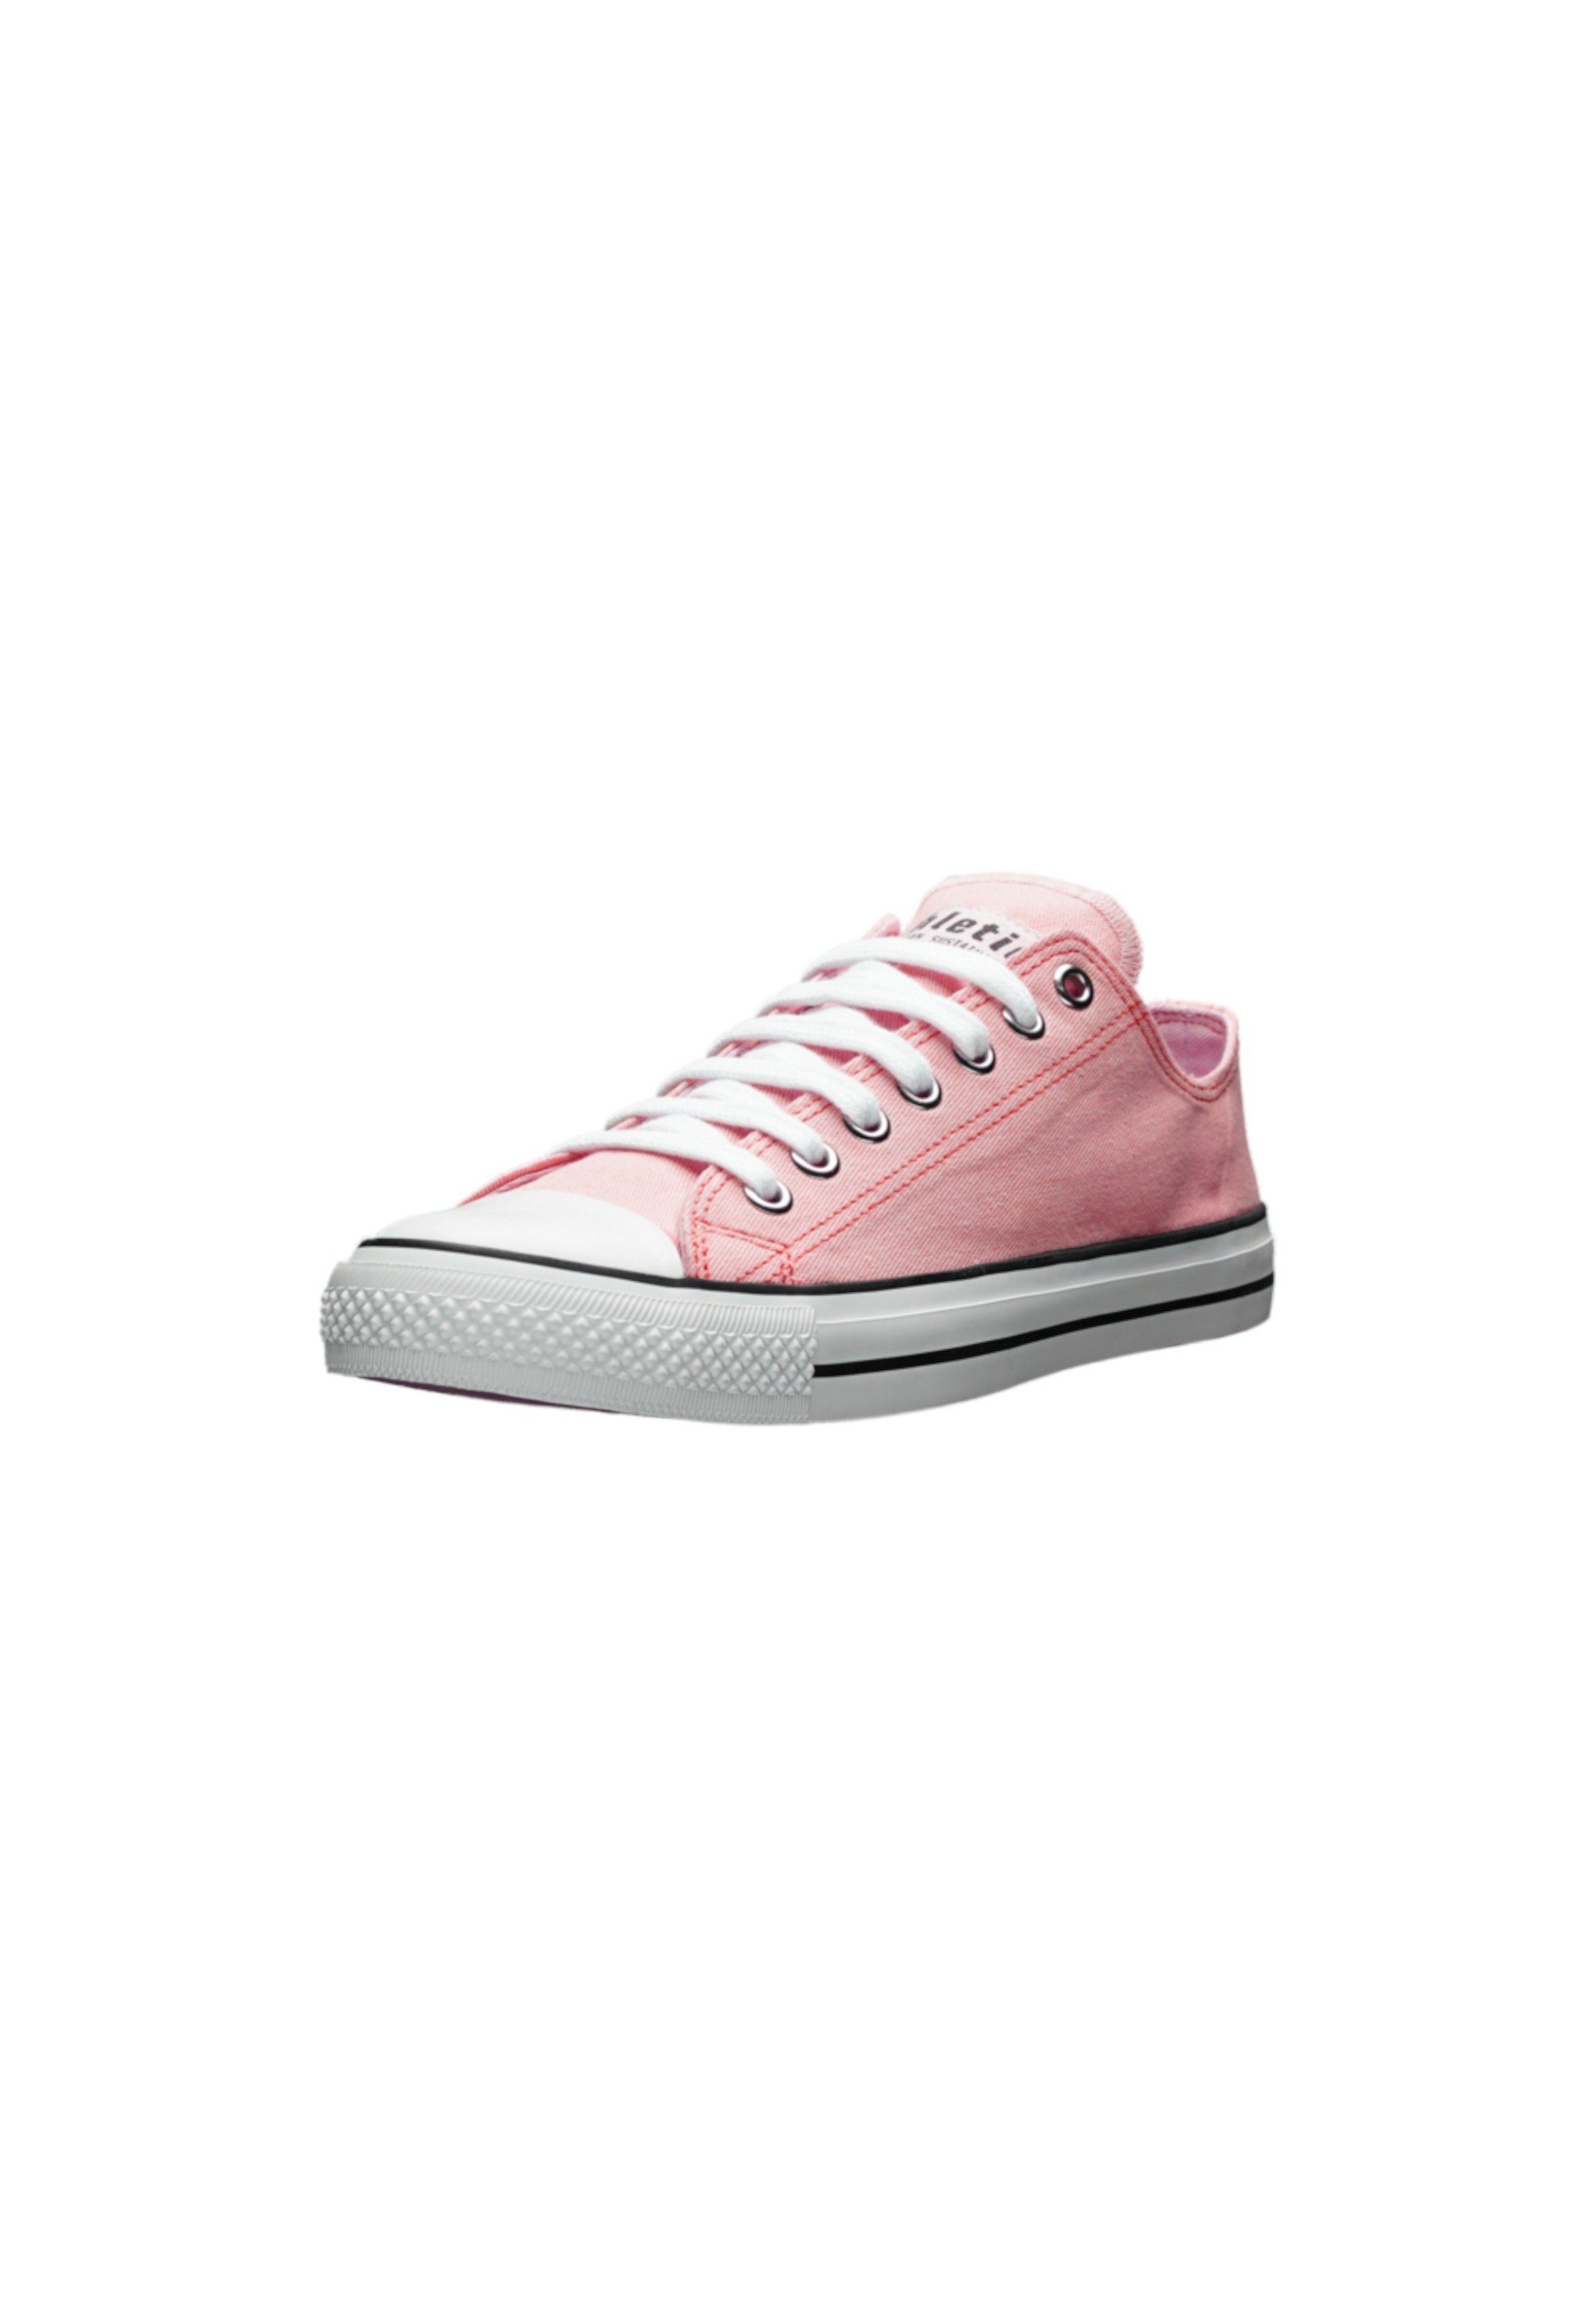 ETHLETIC Fair Trainer White Cap Lo Cut Sneaker Fair, Vegan, Nachhaltig Strawberry Pink P - Just White